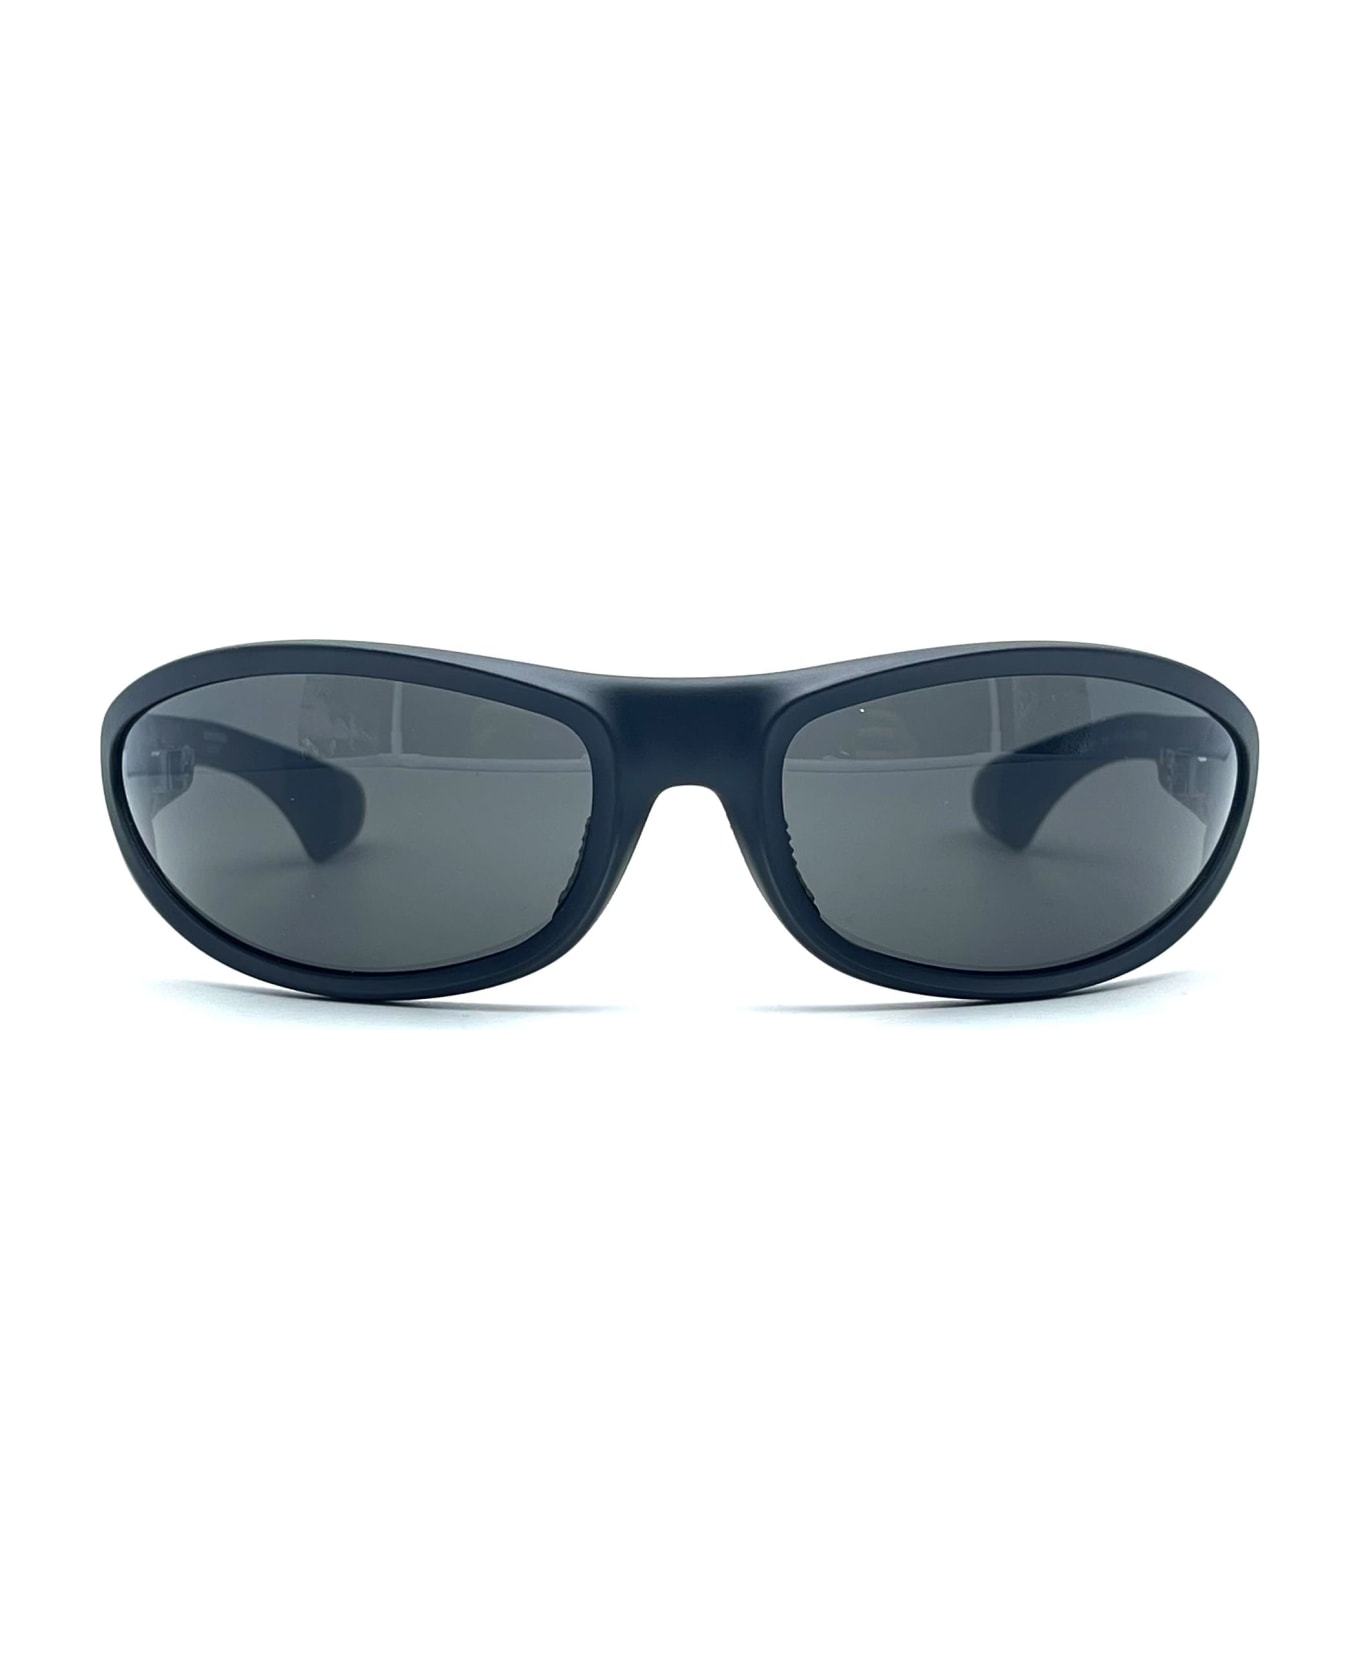 Chrome Hearts Spreader - Matte Black Sunglasses - black matte